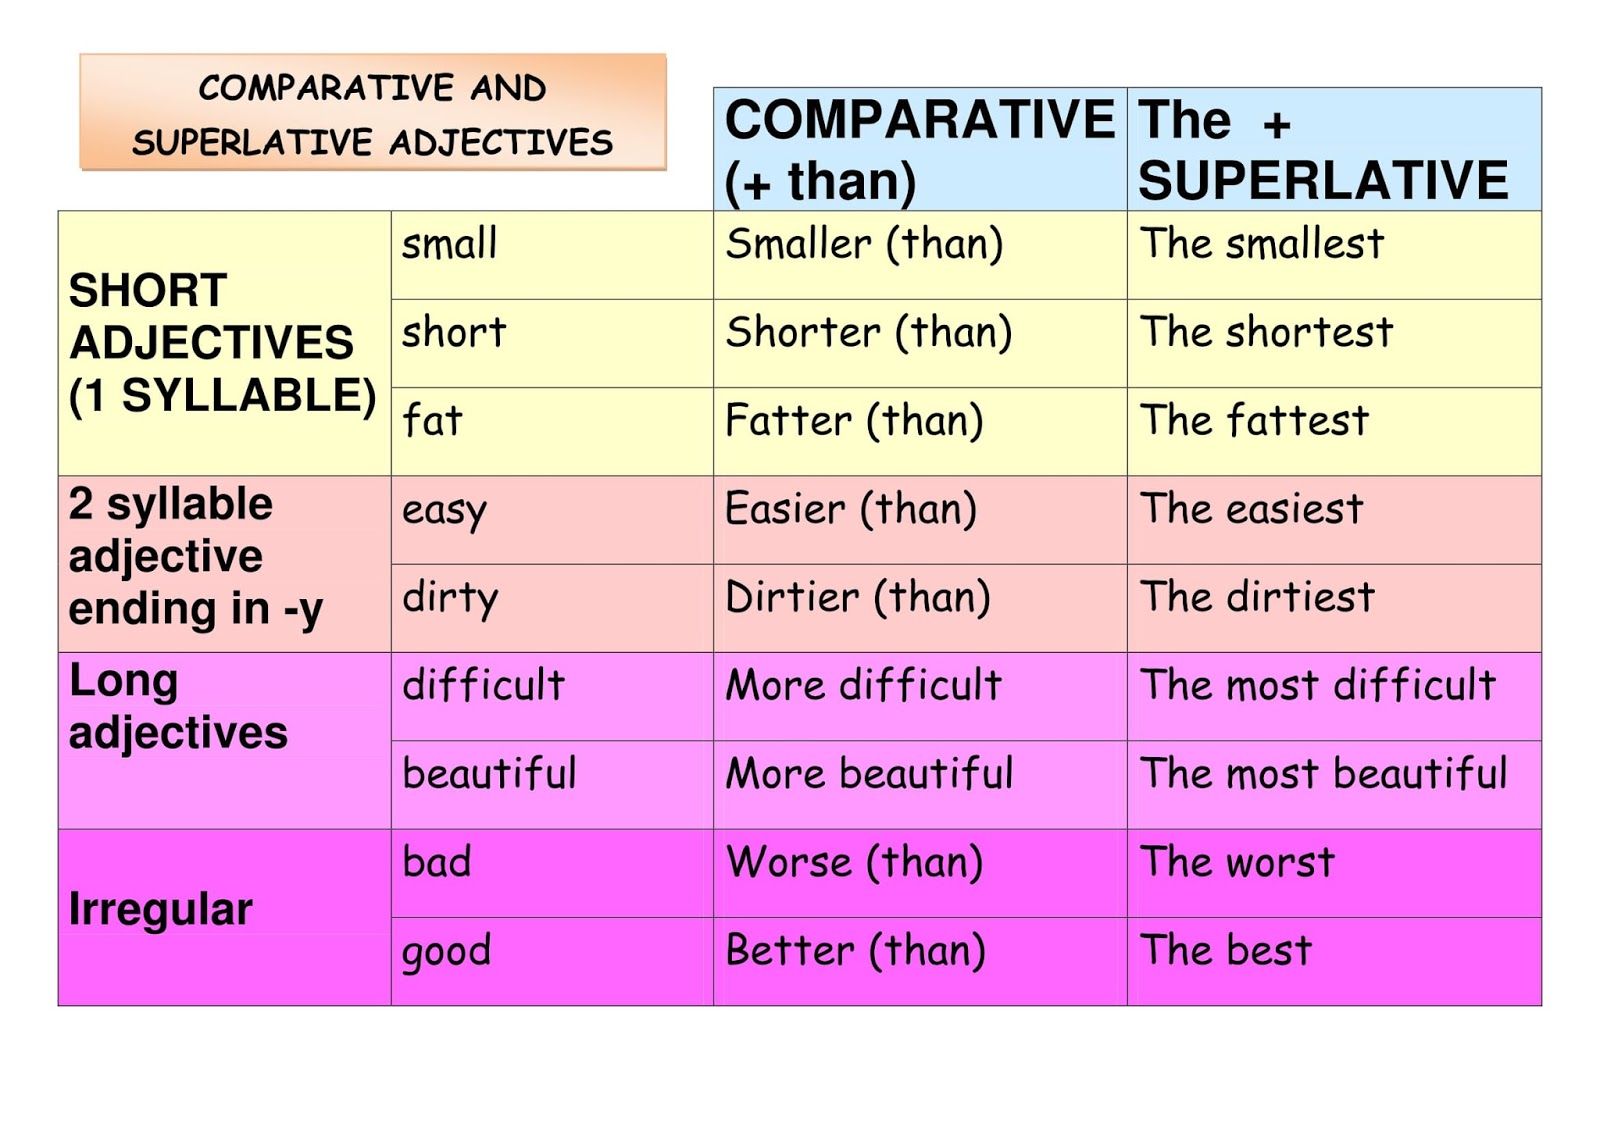 Adjective comparative superlative funny. Superlative adjectives правило. Таблица Comparative and Superlative. Comparative and Superlative forms of adjectives. Comparative and Superlative adjectives правило.